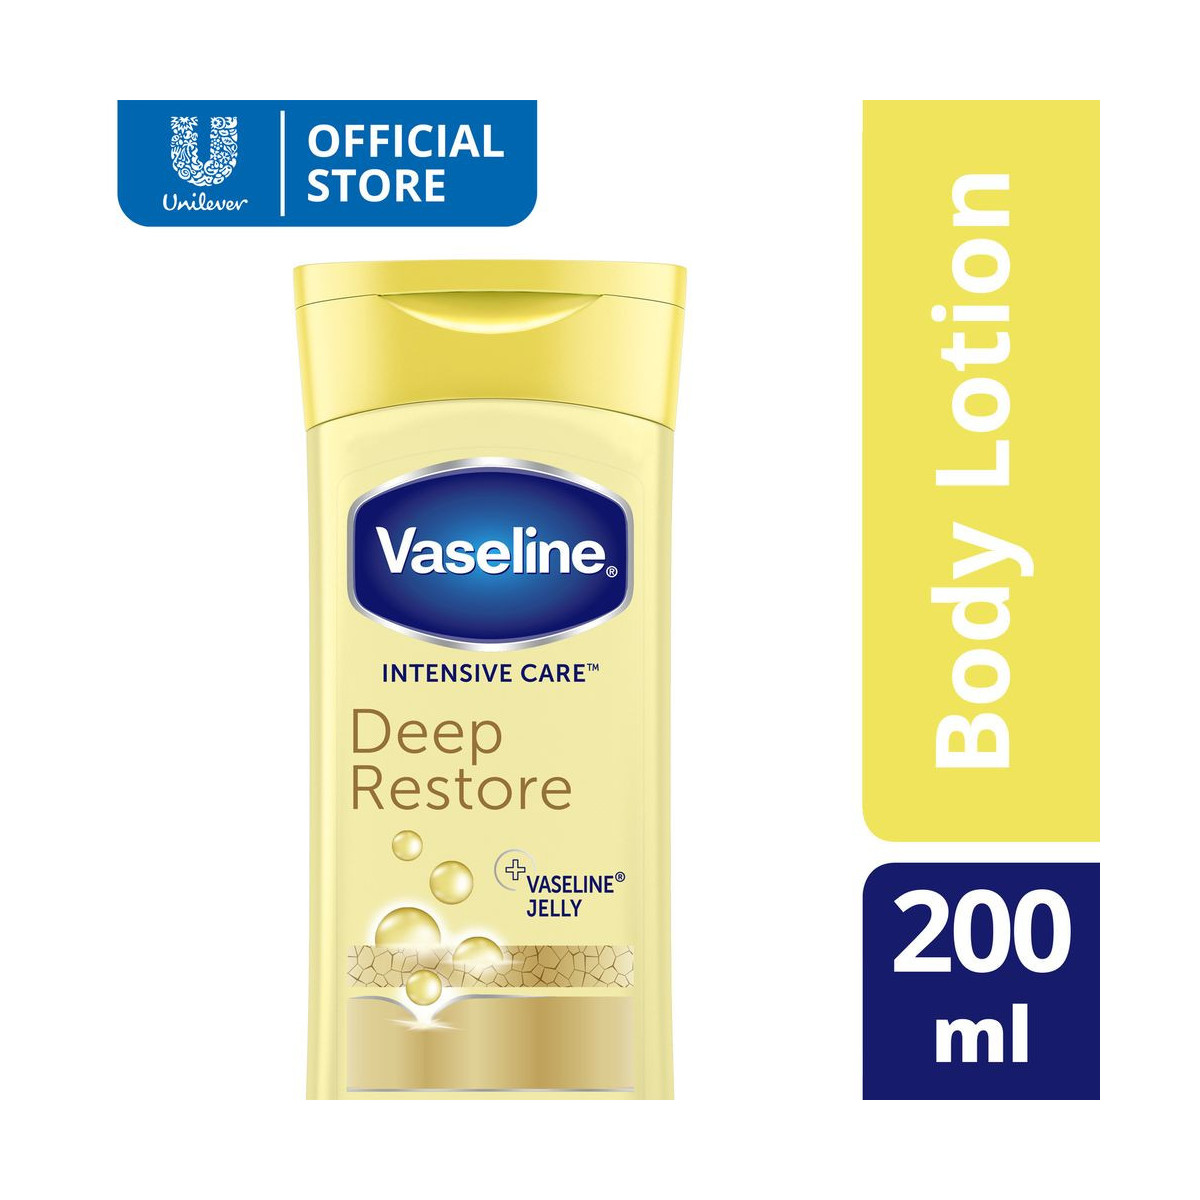 Vaseline Intensive Care Lotion Deep Restore 200ML